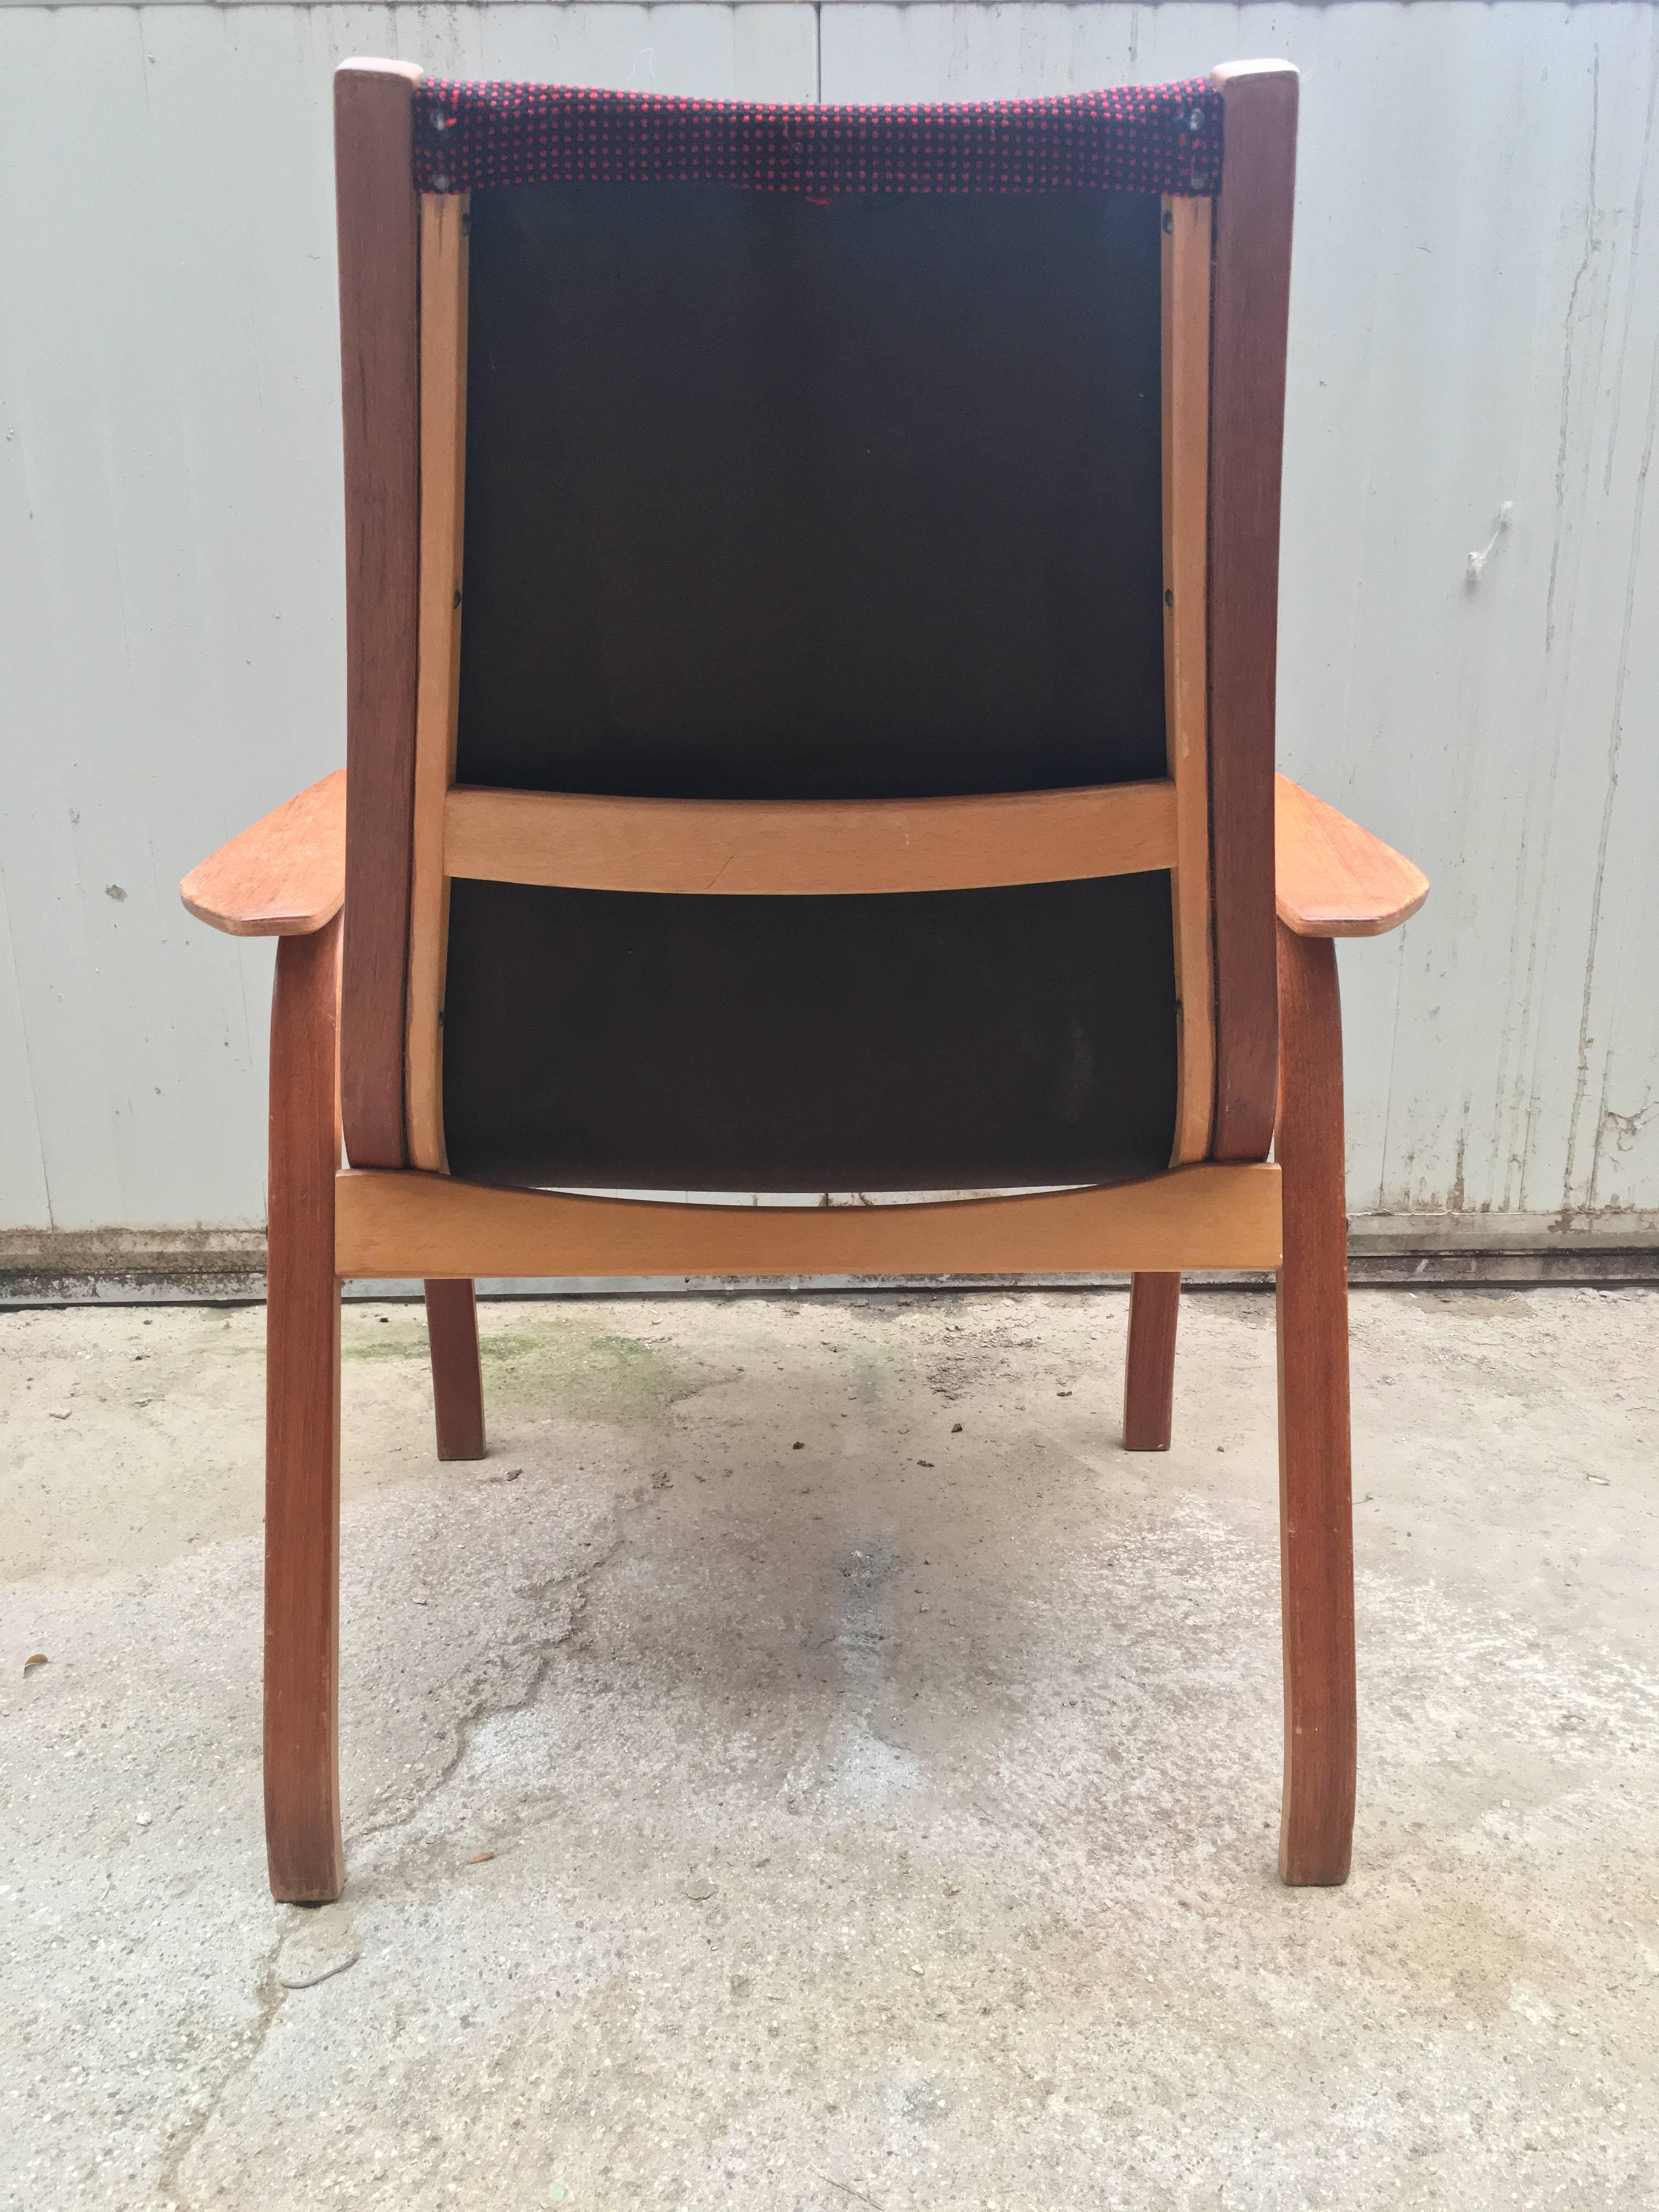 Vintage Swedish Lounge Chair Armchair in Style of Yngve Ekström Design, 1960 For Sale 1